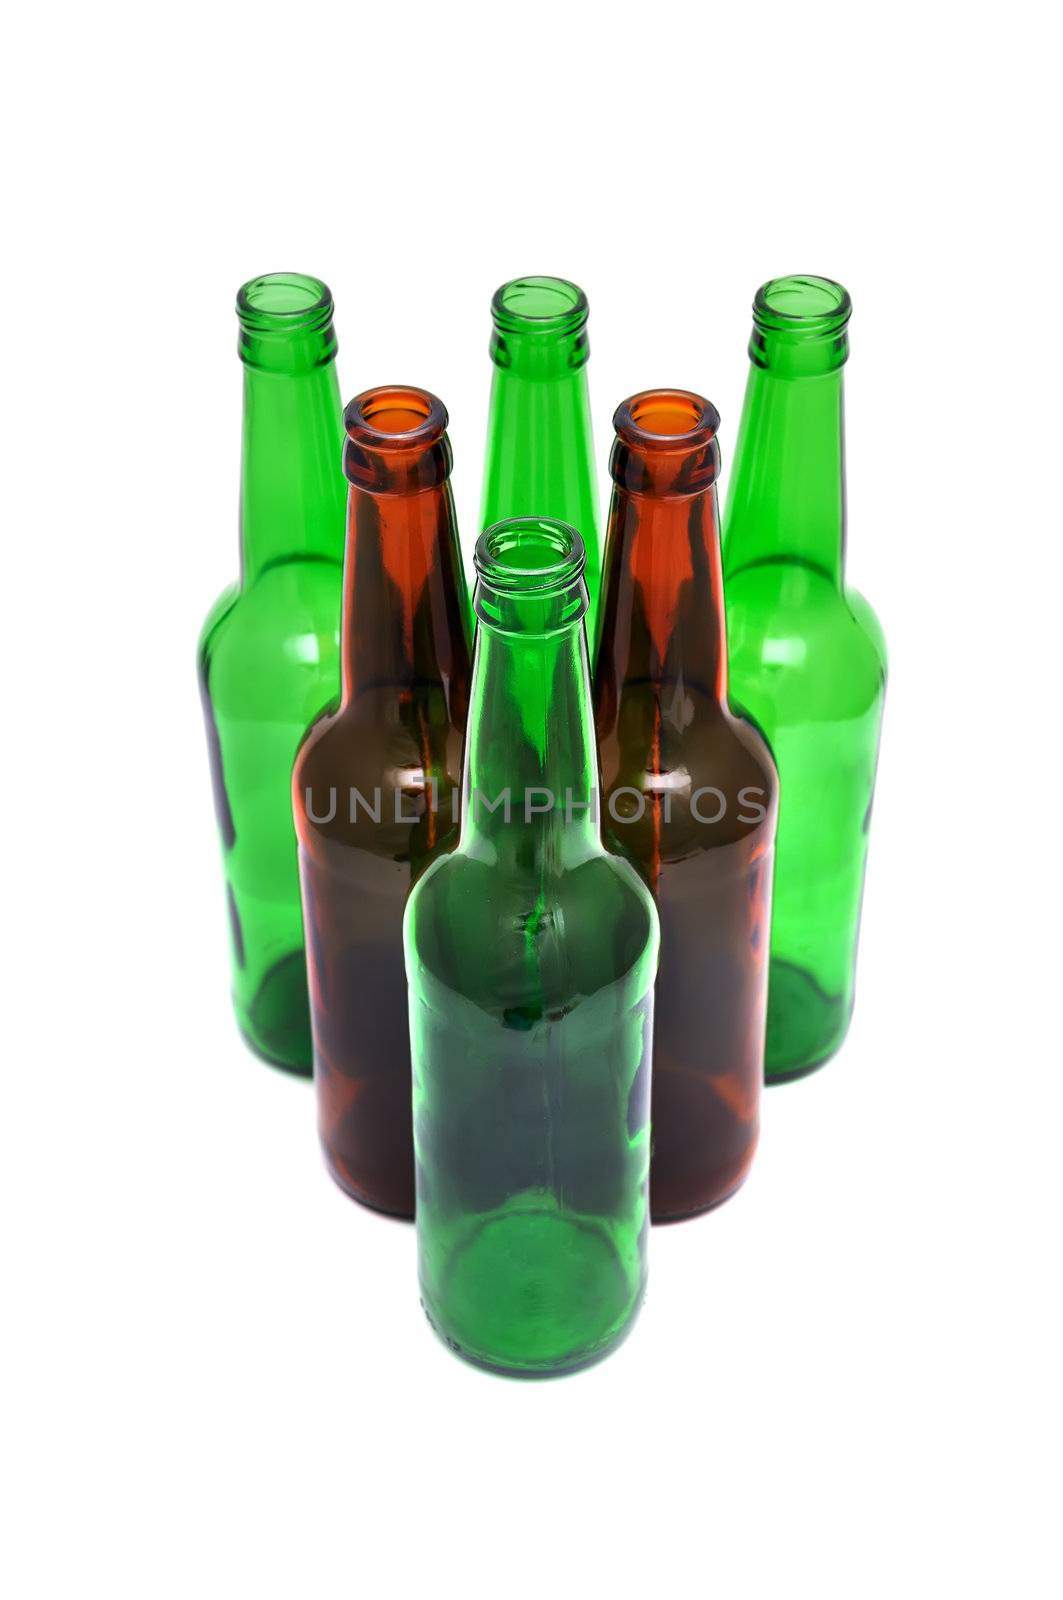 colored beer bottles by vetkit